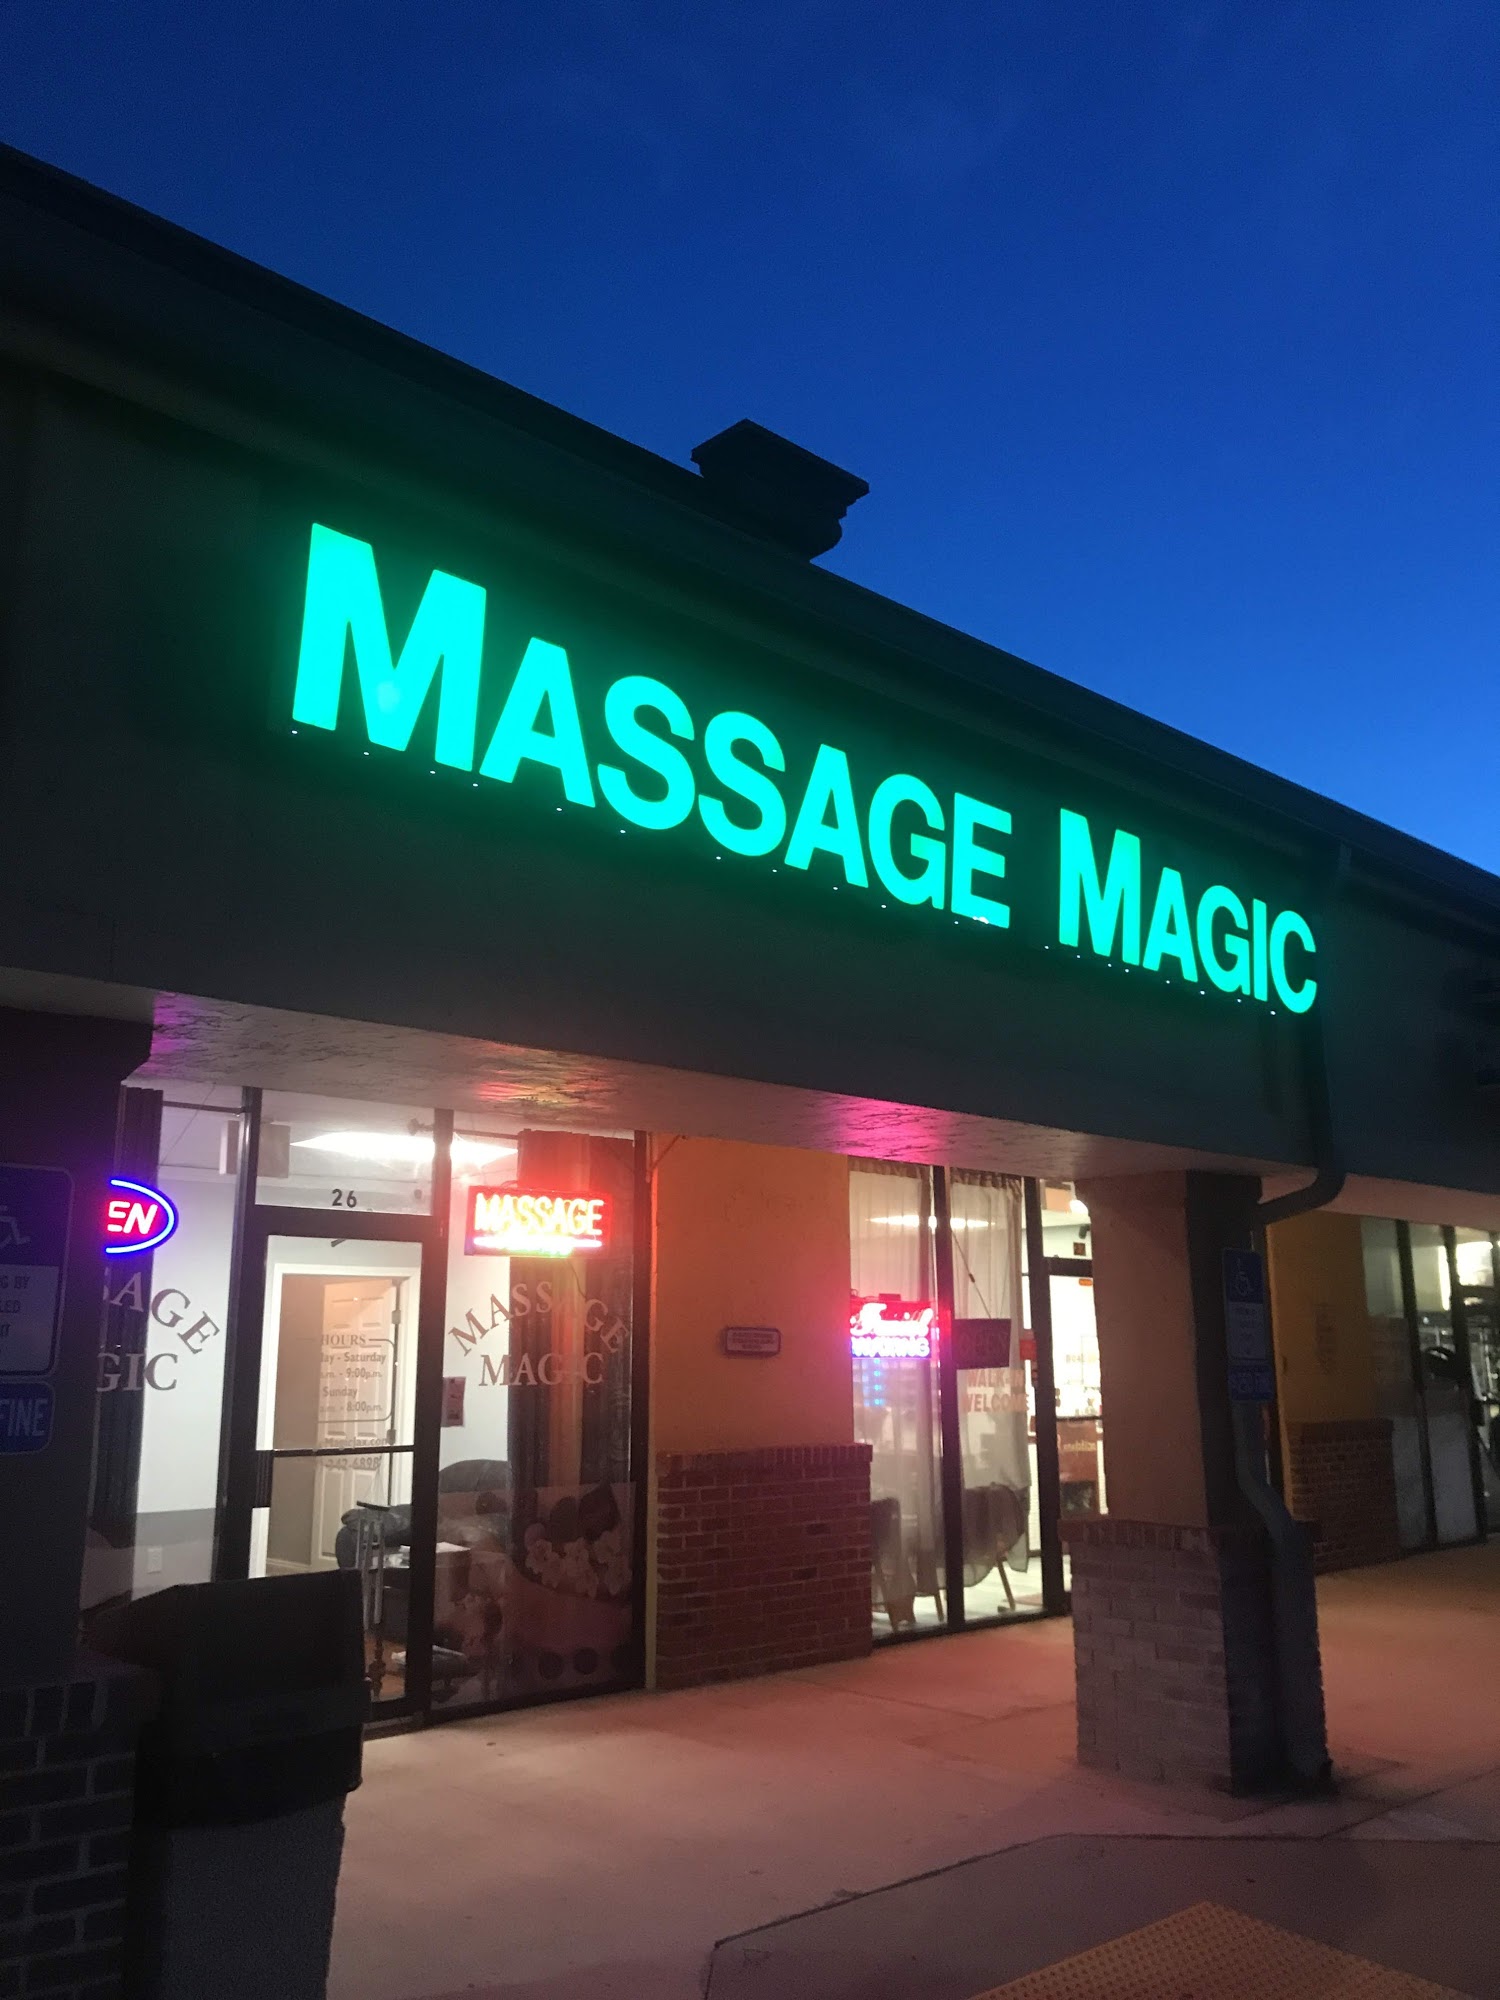 Massage Magic